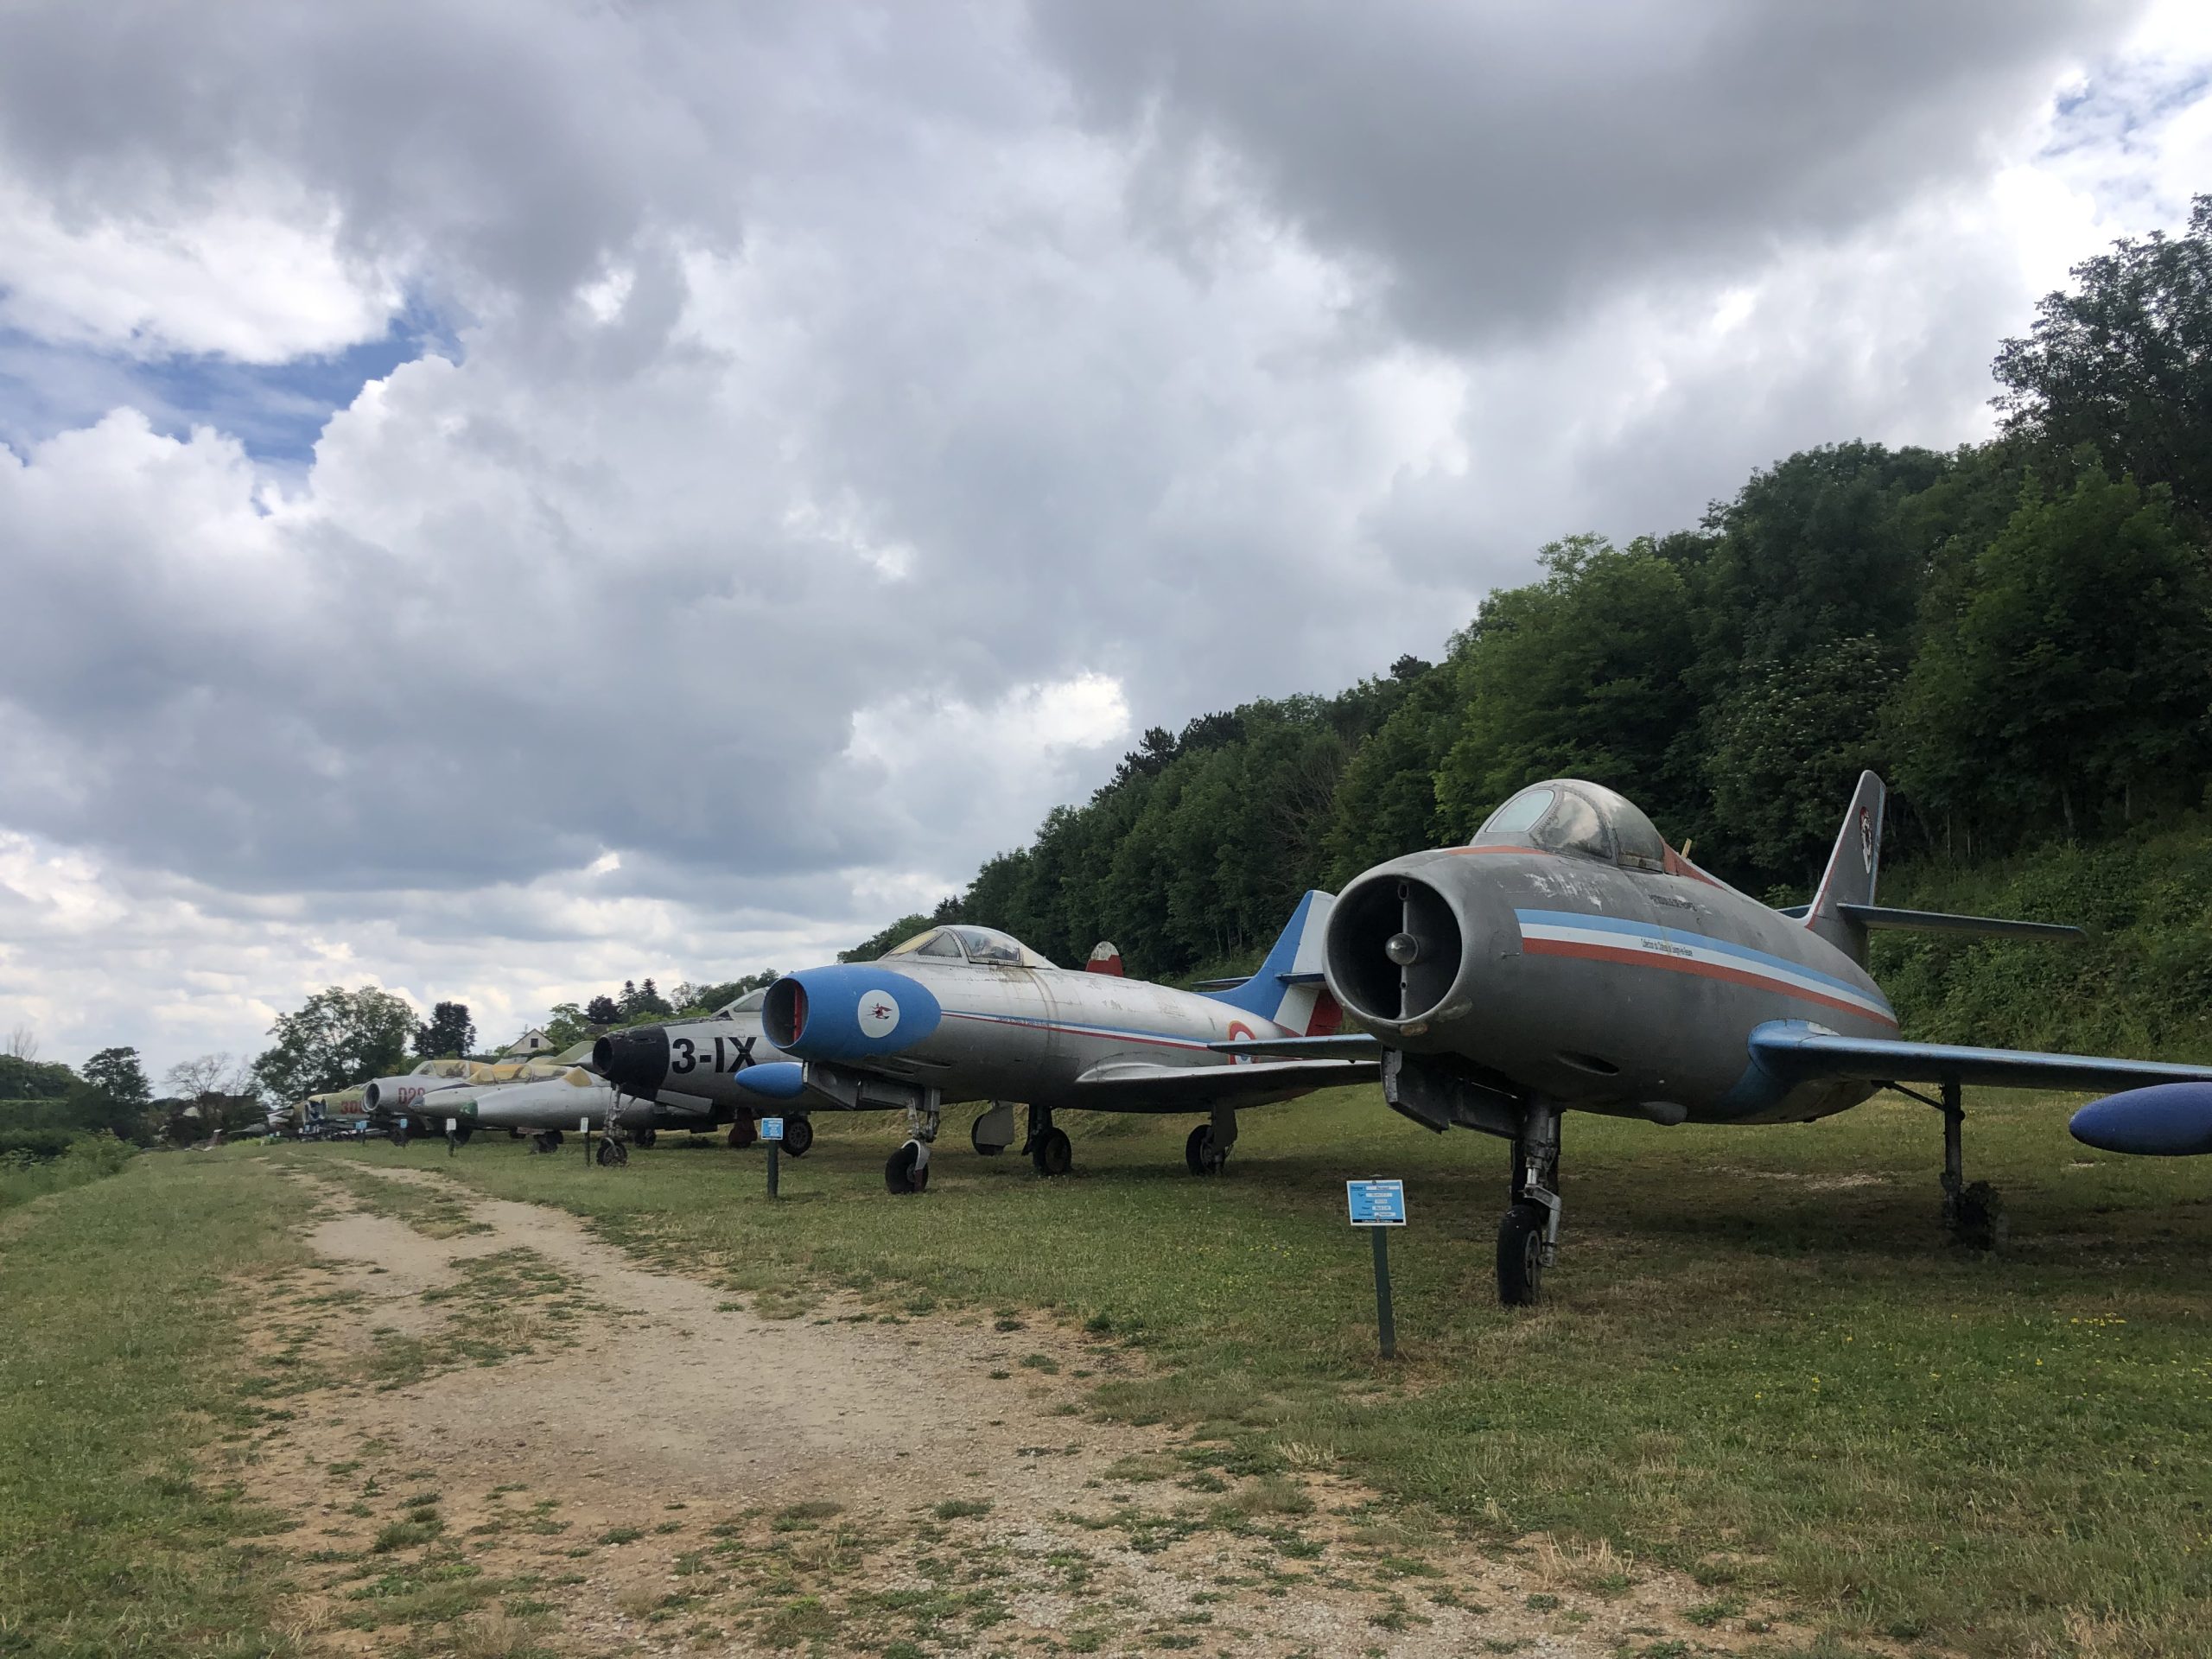 Château de Savigny-lès-Beaune has an incredible collection of aircraft.